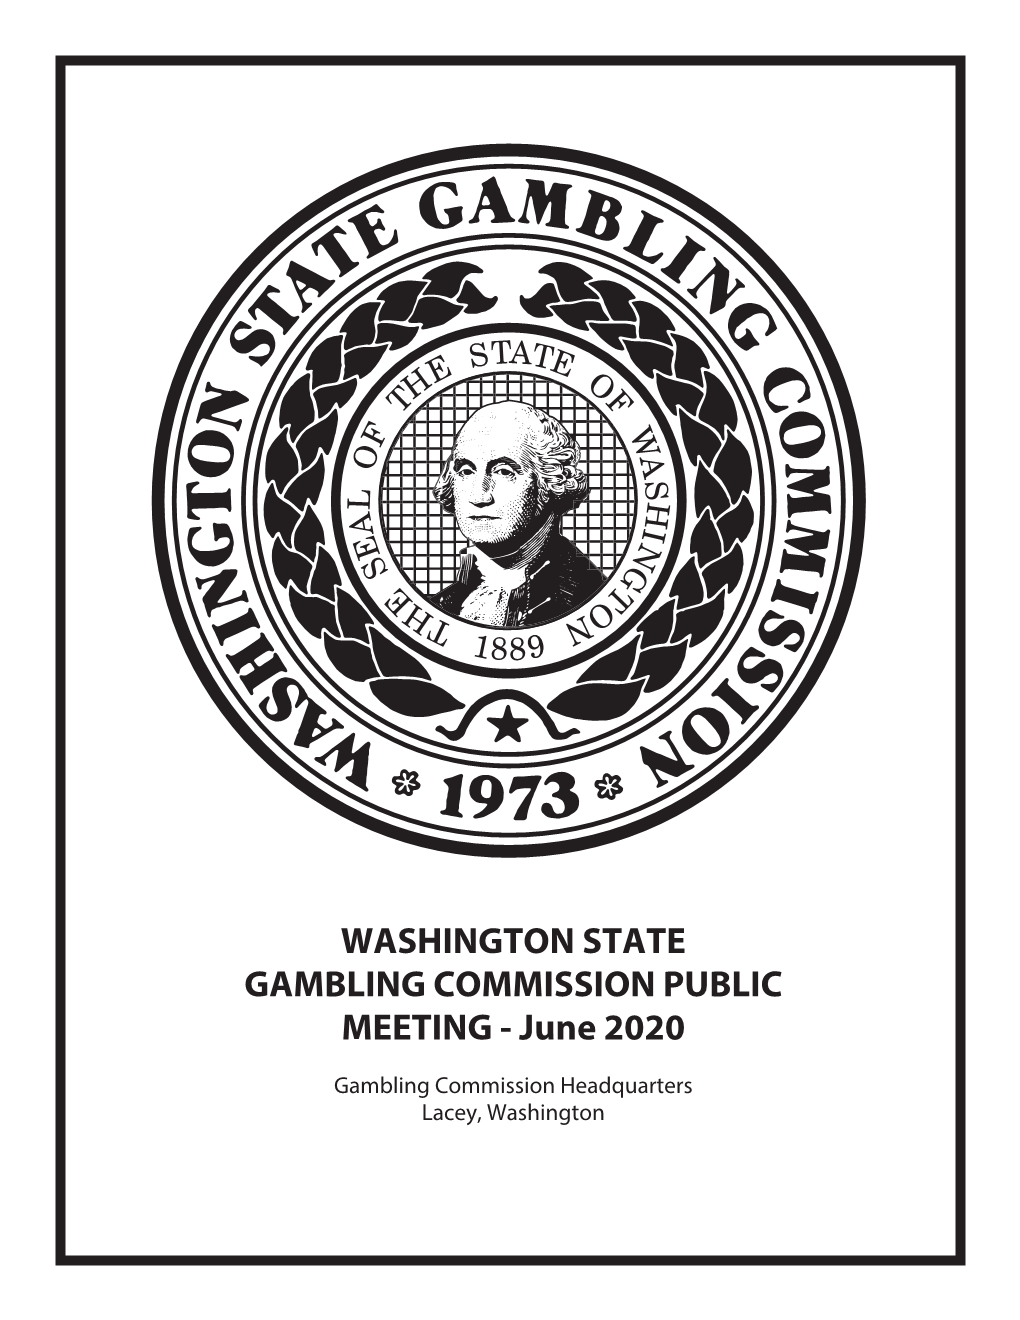 WASHINGTON STATE GAMBLING COMMISSION PUBLIC MEETING - June 2020